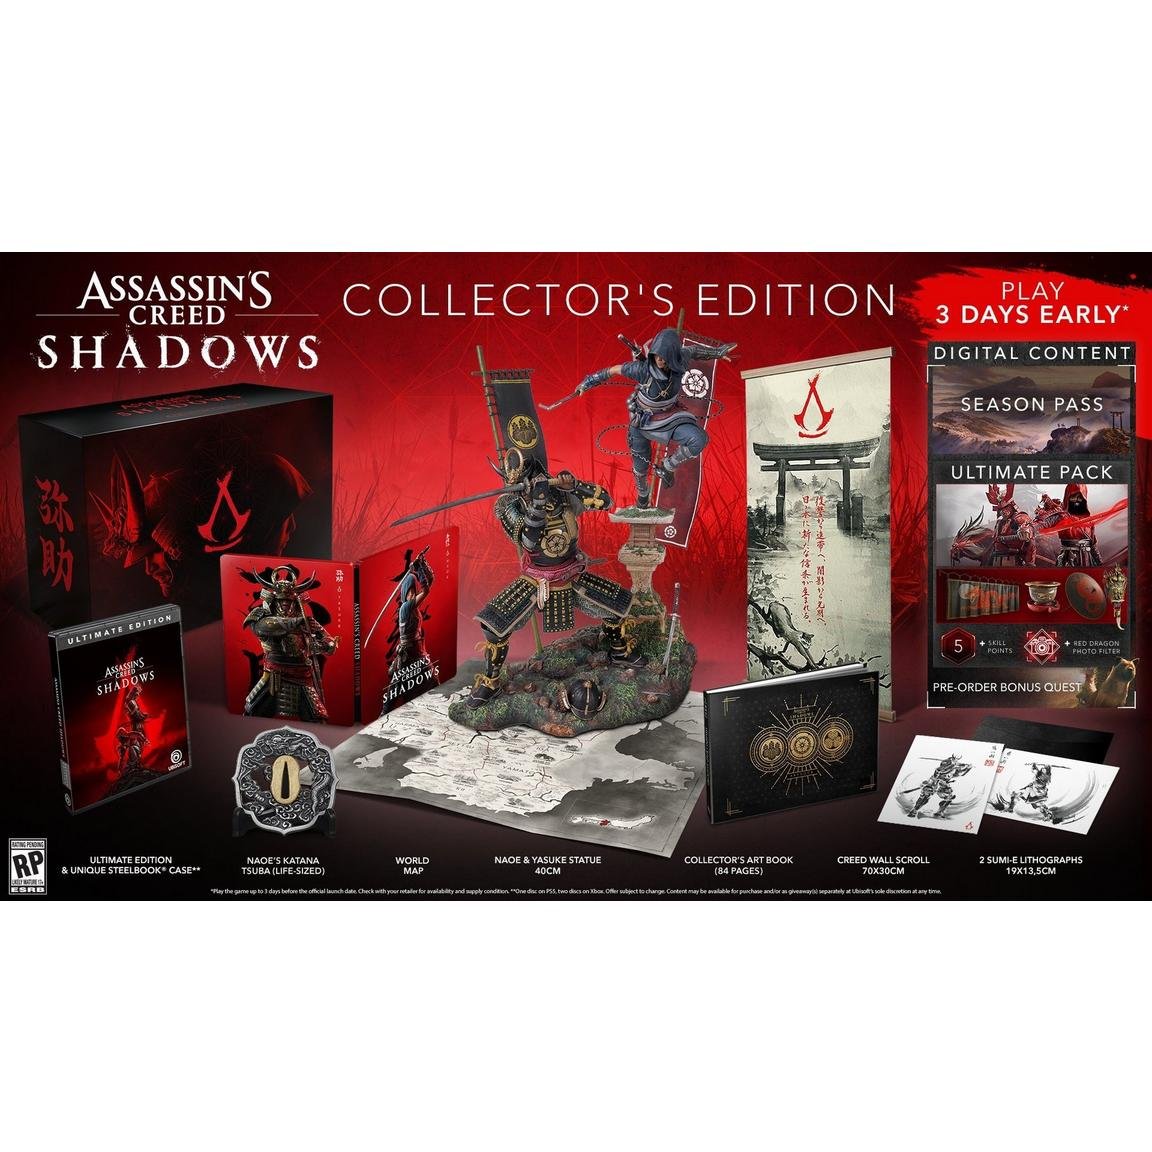 Preorder Now: Assassins Creed Shadows - Collector's Edition on GameStop #Ad #AssassinsCreed #AssassinsCreedShadows Link: finderz.info/3QMJPGz